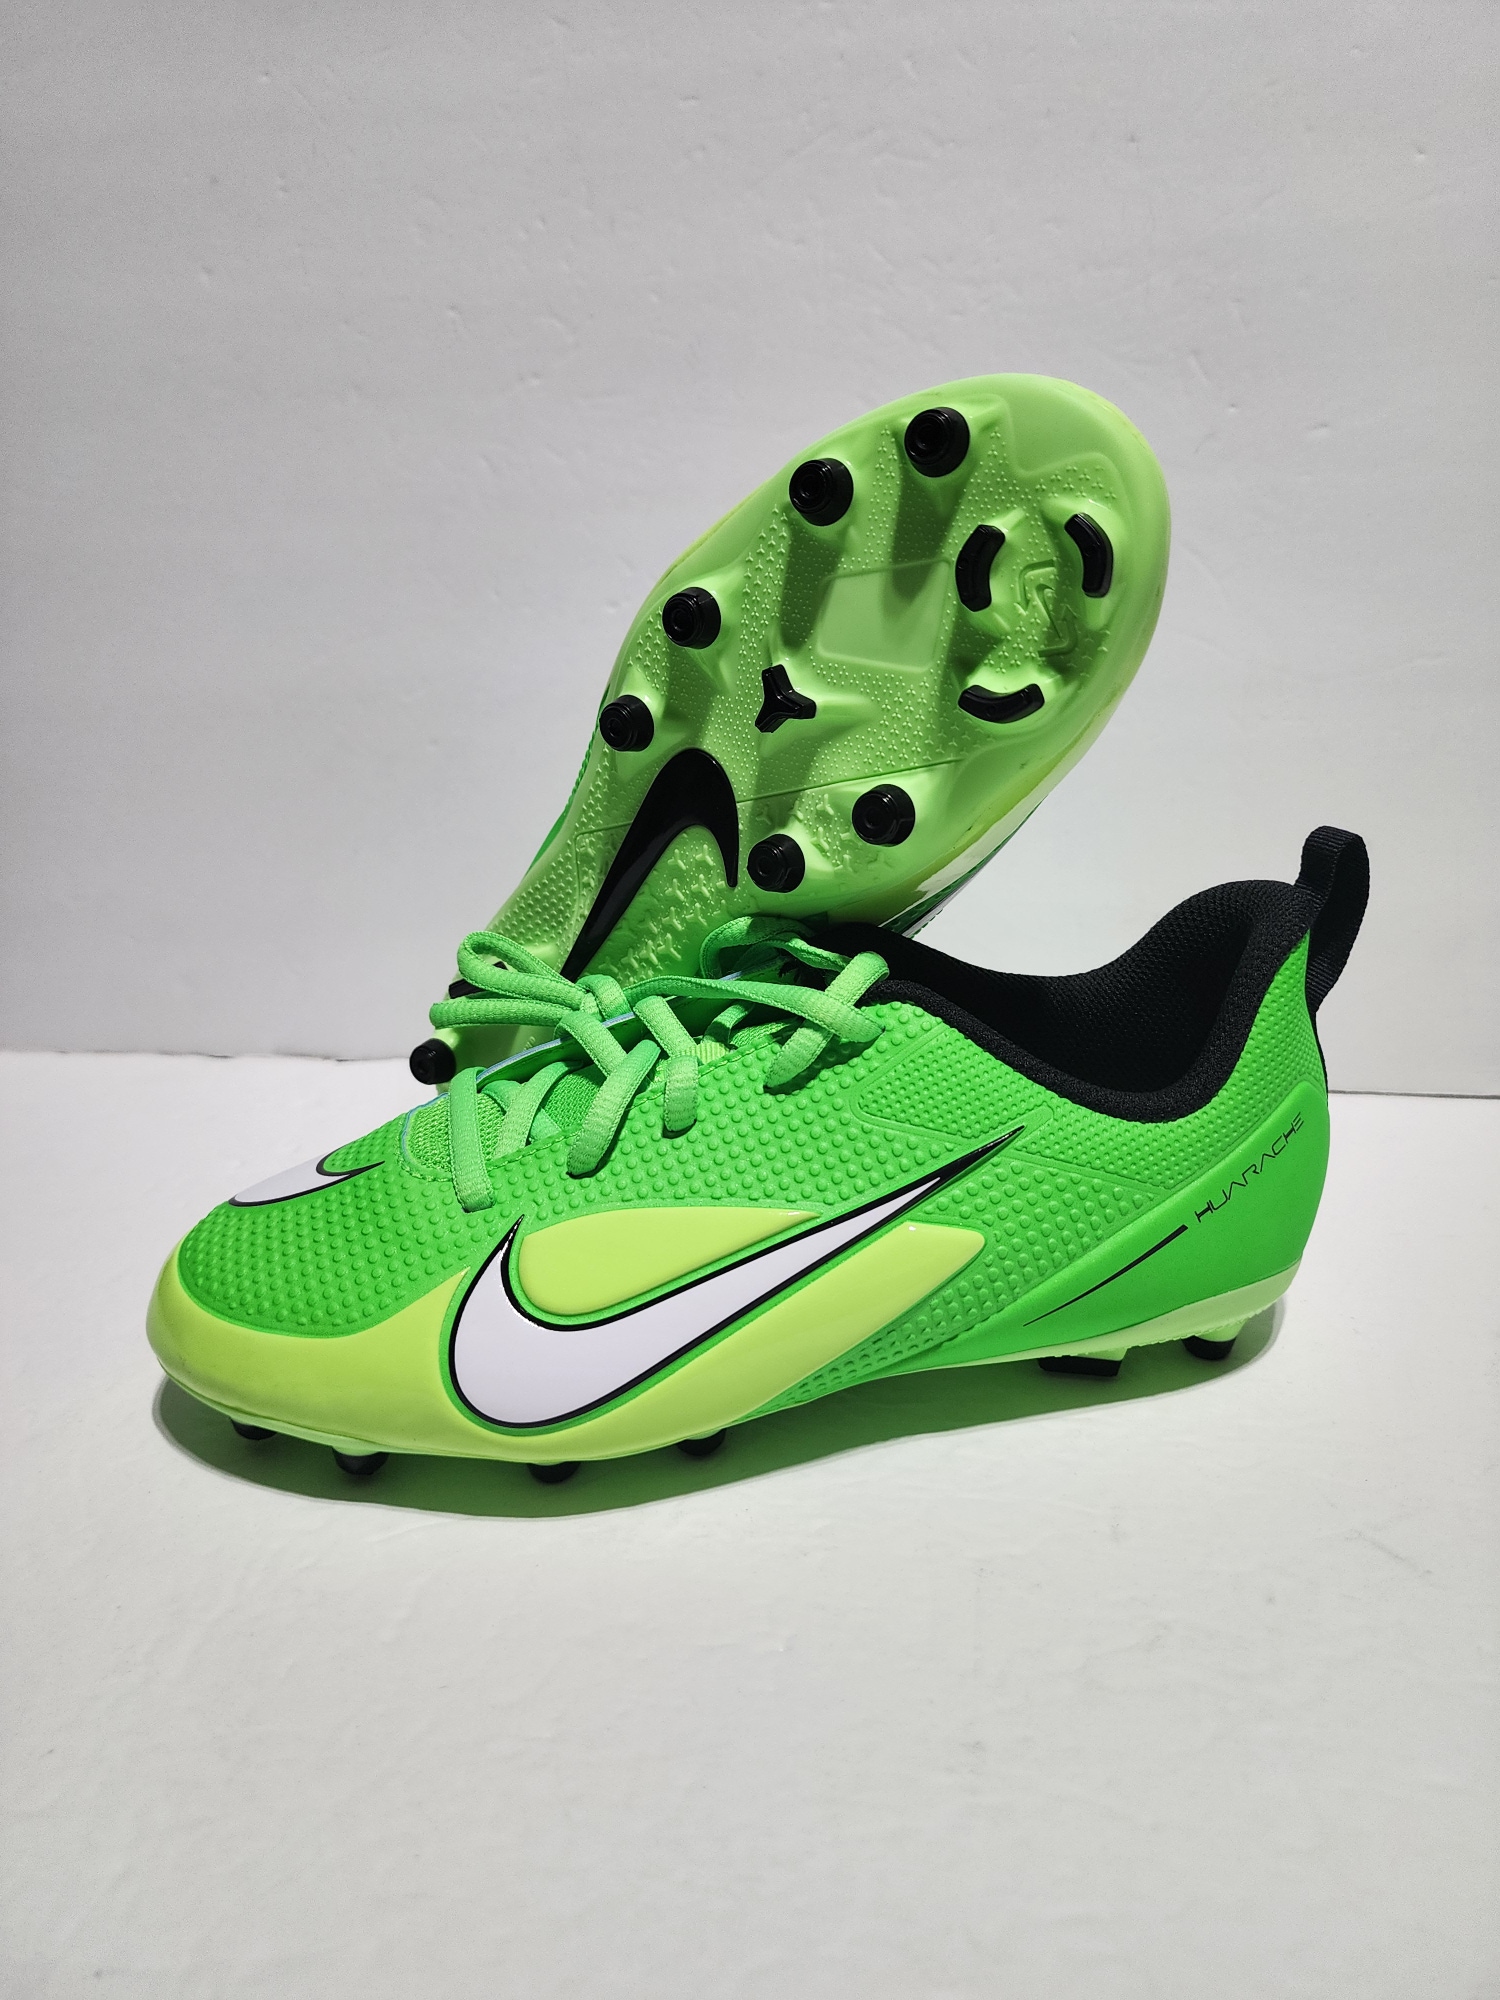 New Nike Alpha Huarache Lacrosse Athletic Cleats Kids Size 5.5Y CZ6557-300 Green NO BOX